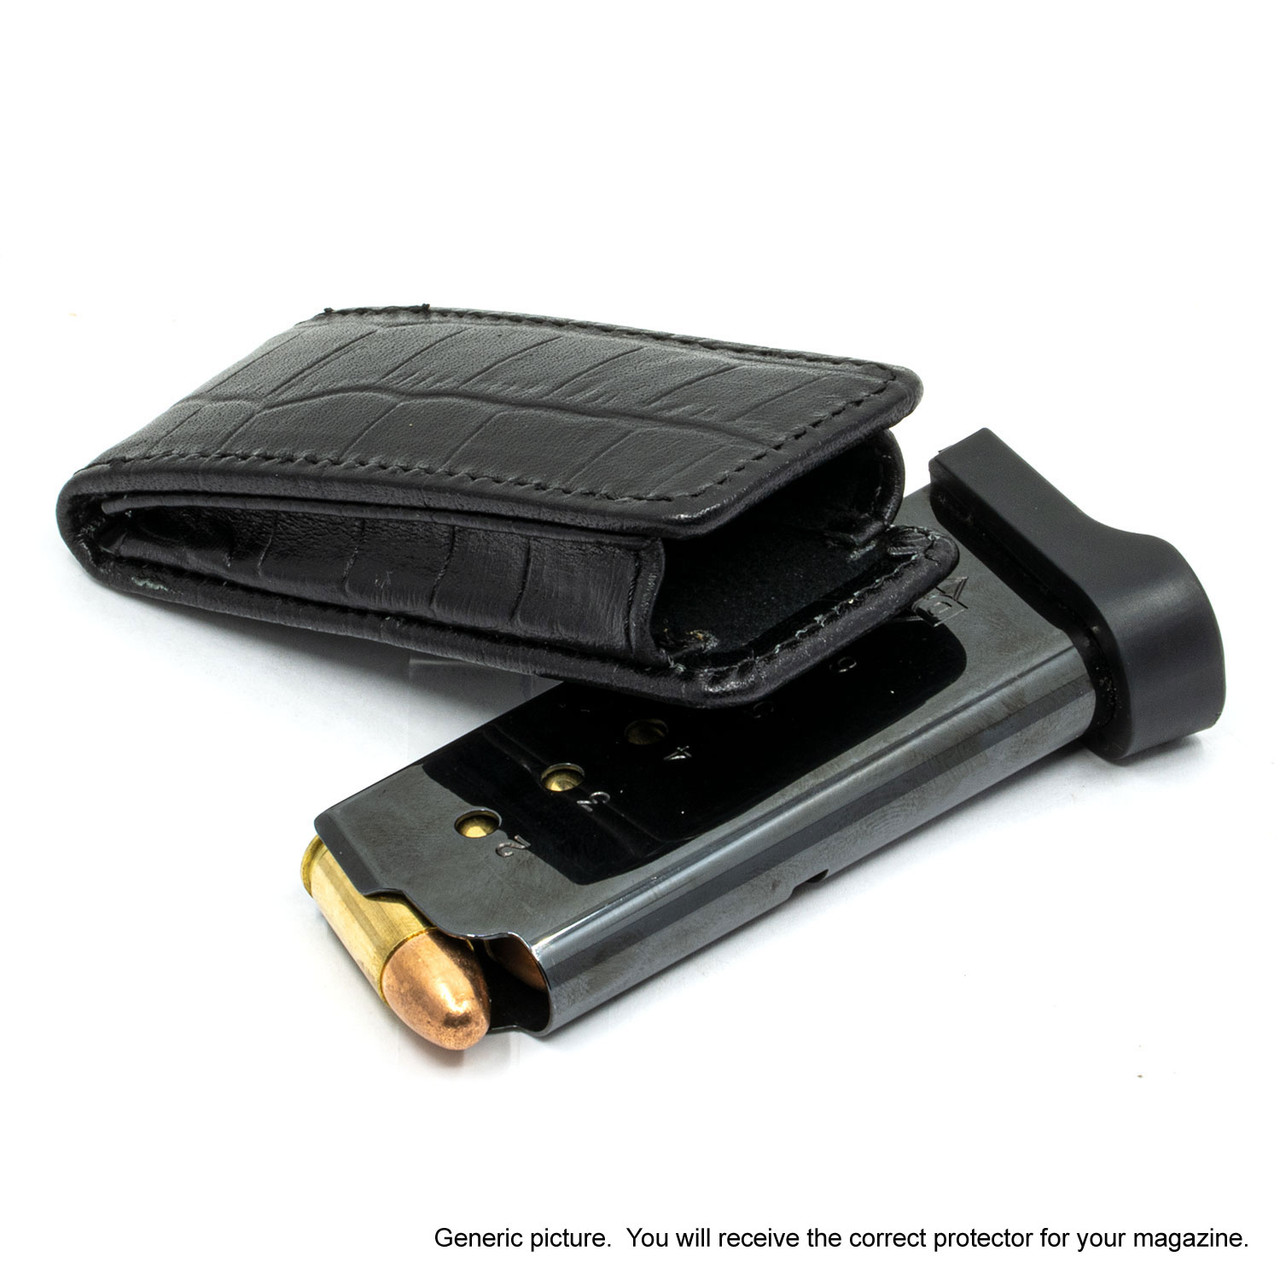 Remington RM380 Black Alligator Magazine Pocket Protector